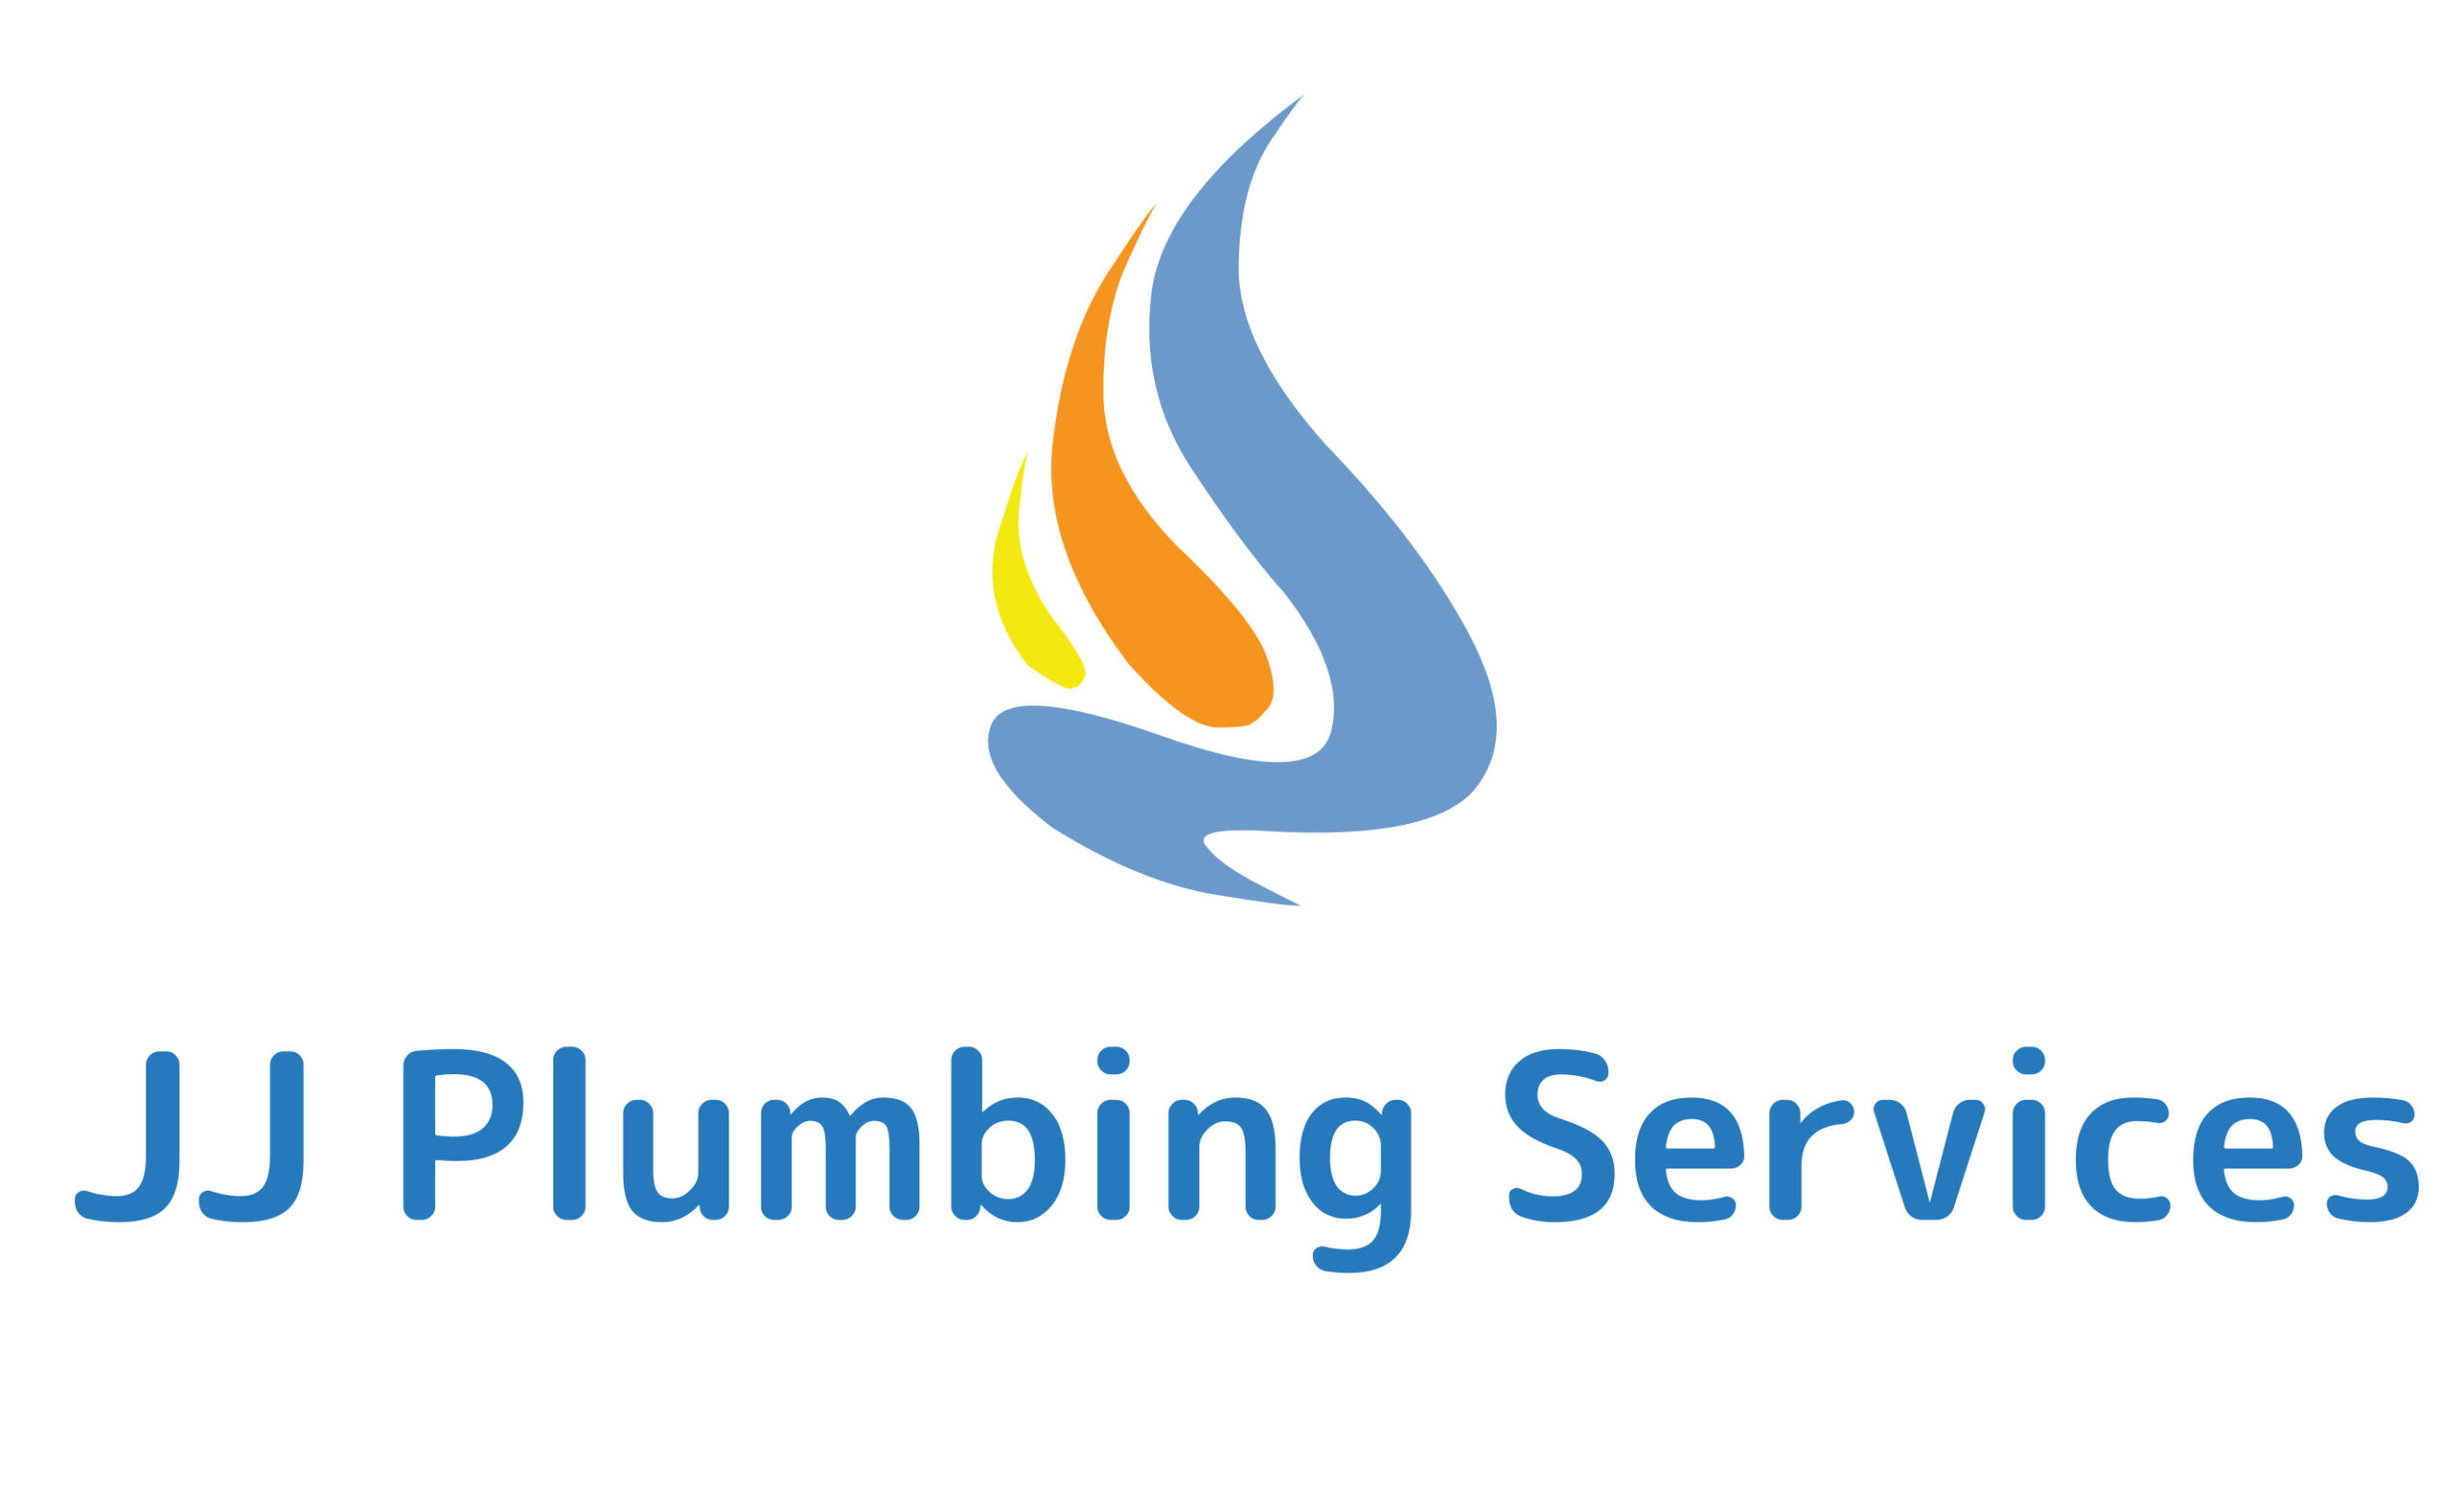 JJ Plumbing Services